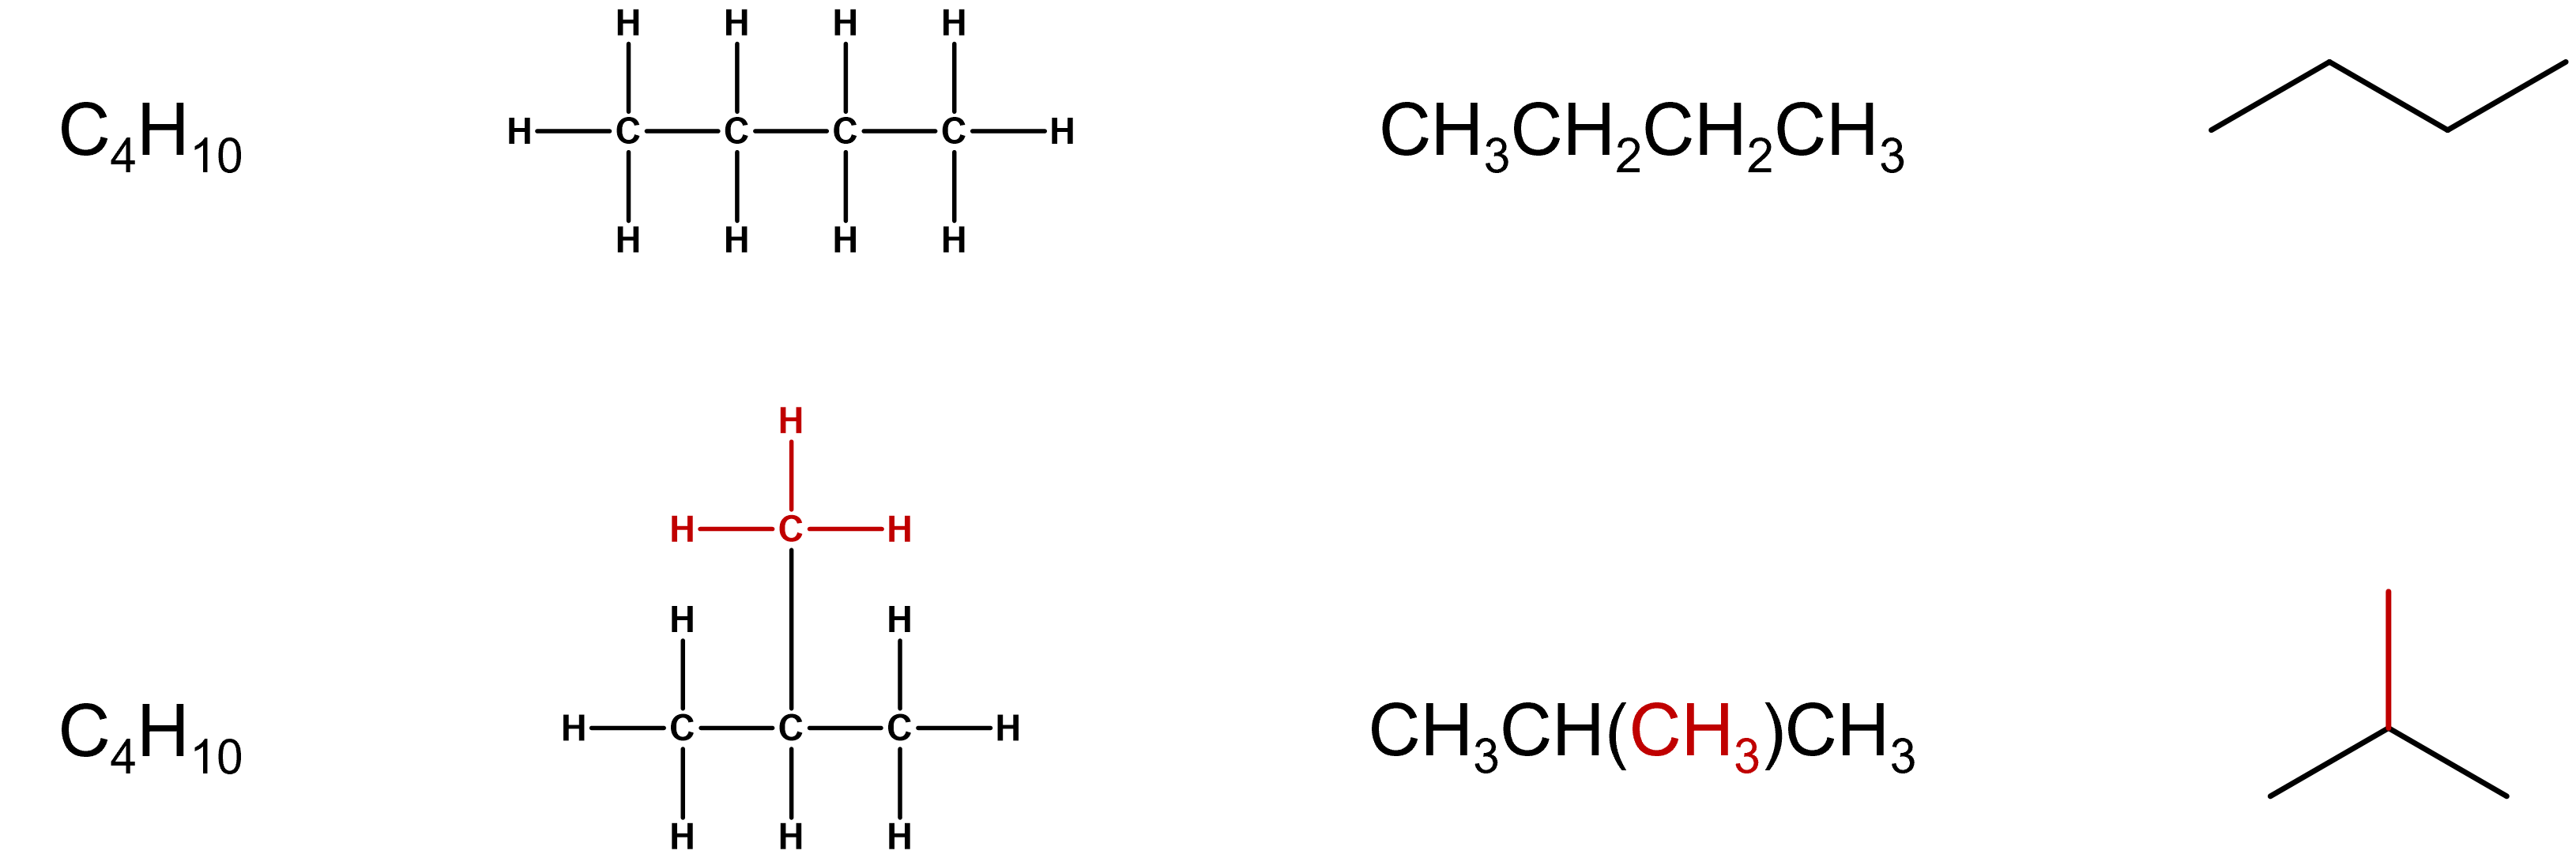 organic structures of butane and isobutane